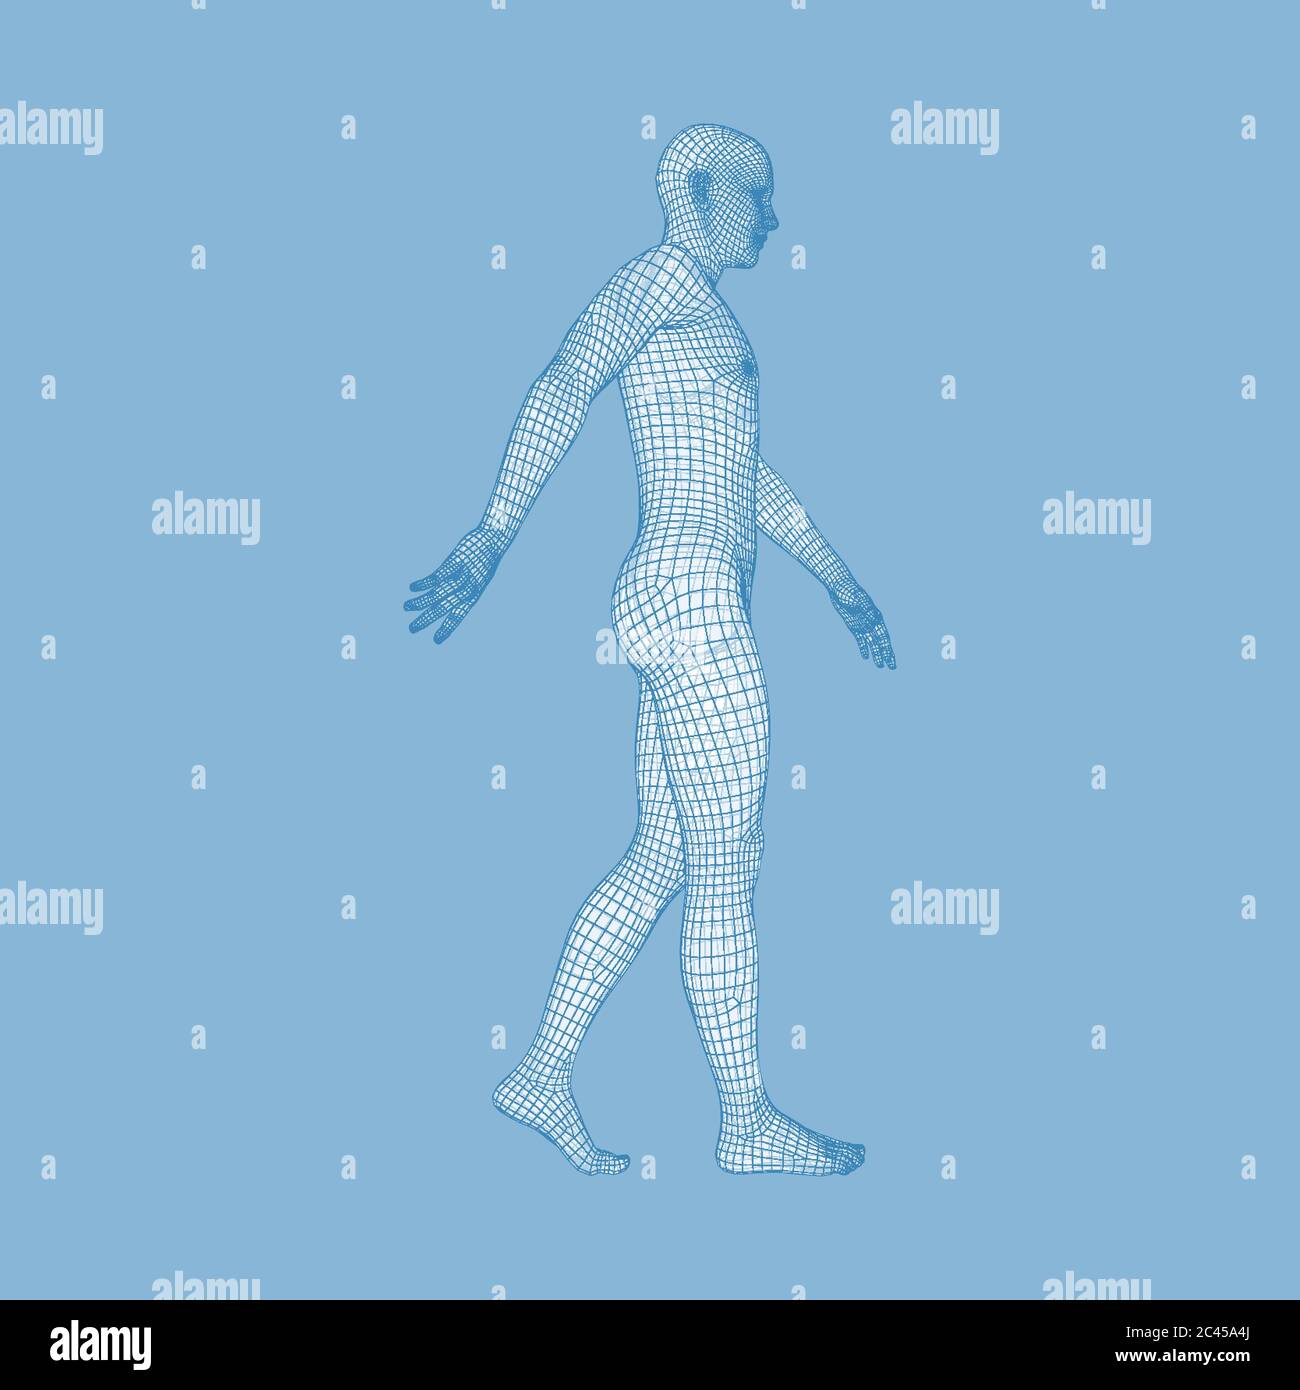 Walking Man. 3D Human Body Model. Geometric Design. Human Body Wire Model.  Vector Illustration. Stock Vector